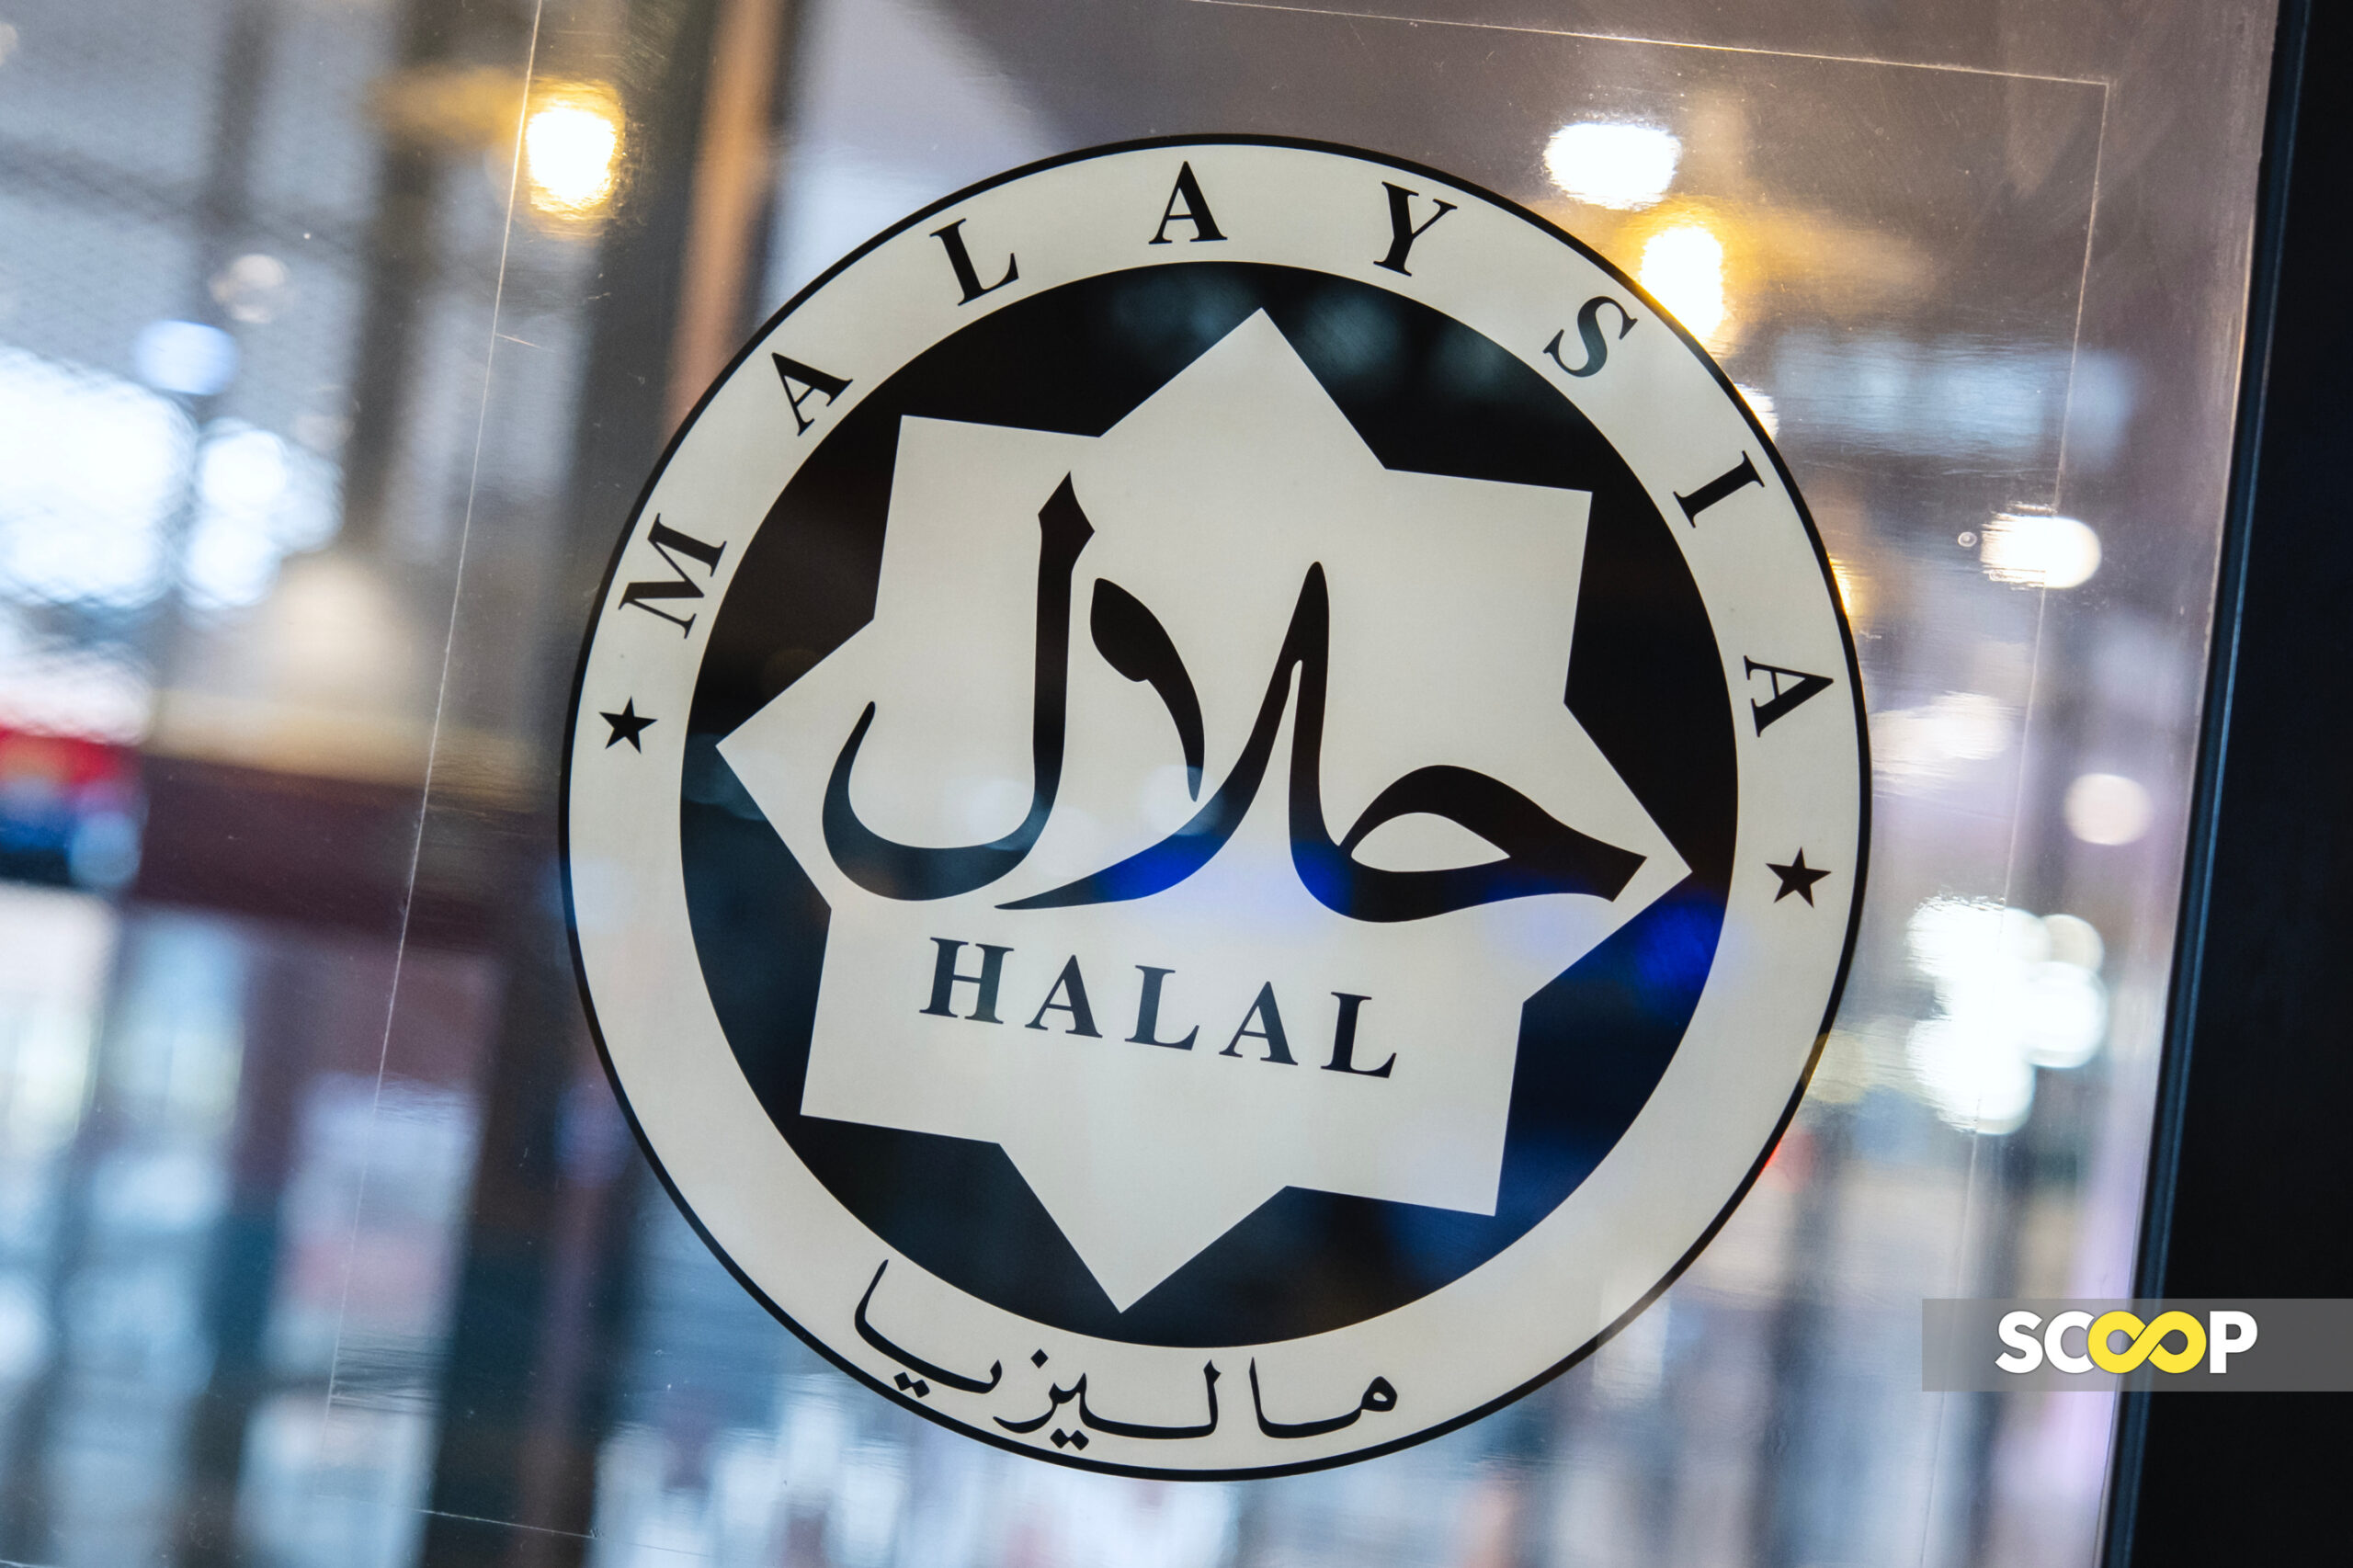 Mengiklan makanan halal tanpa miliki sijil adalah satu kesalahan: Jakim